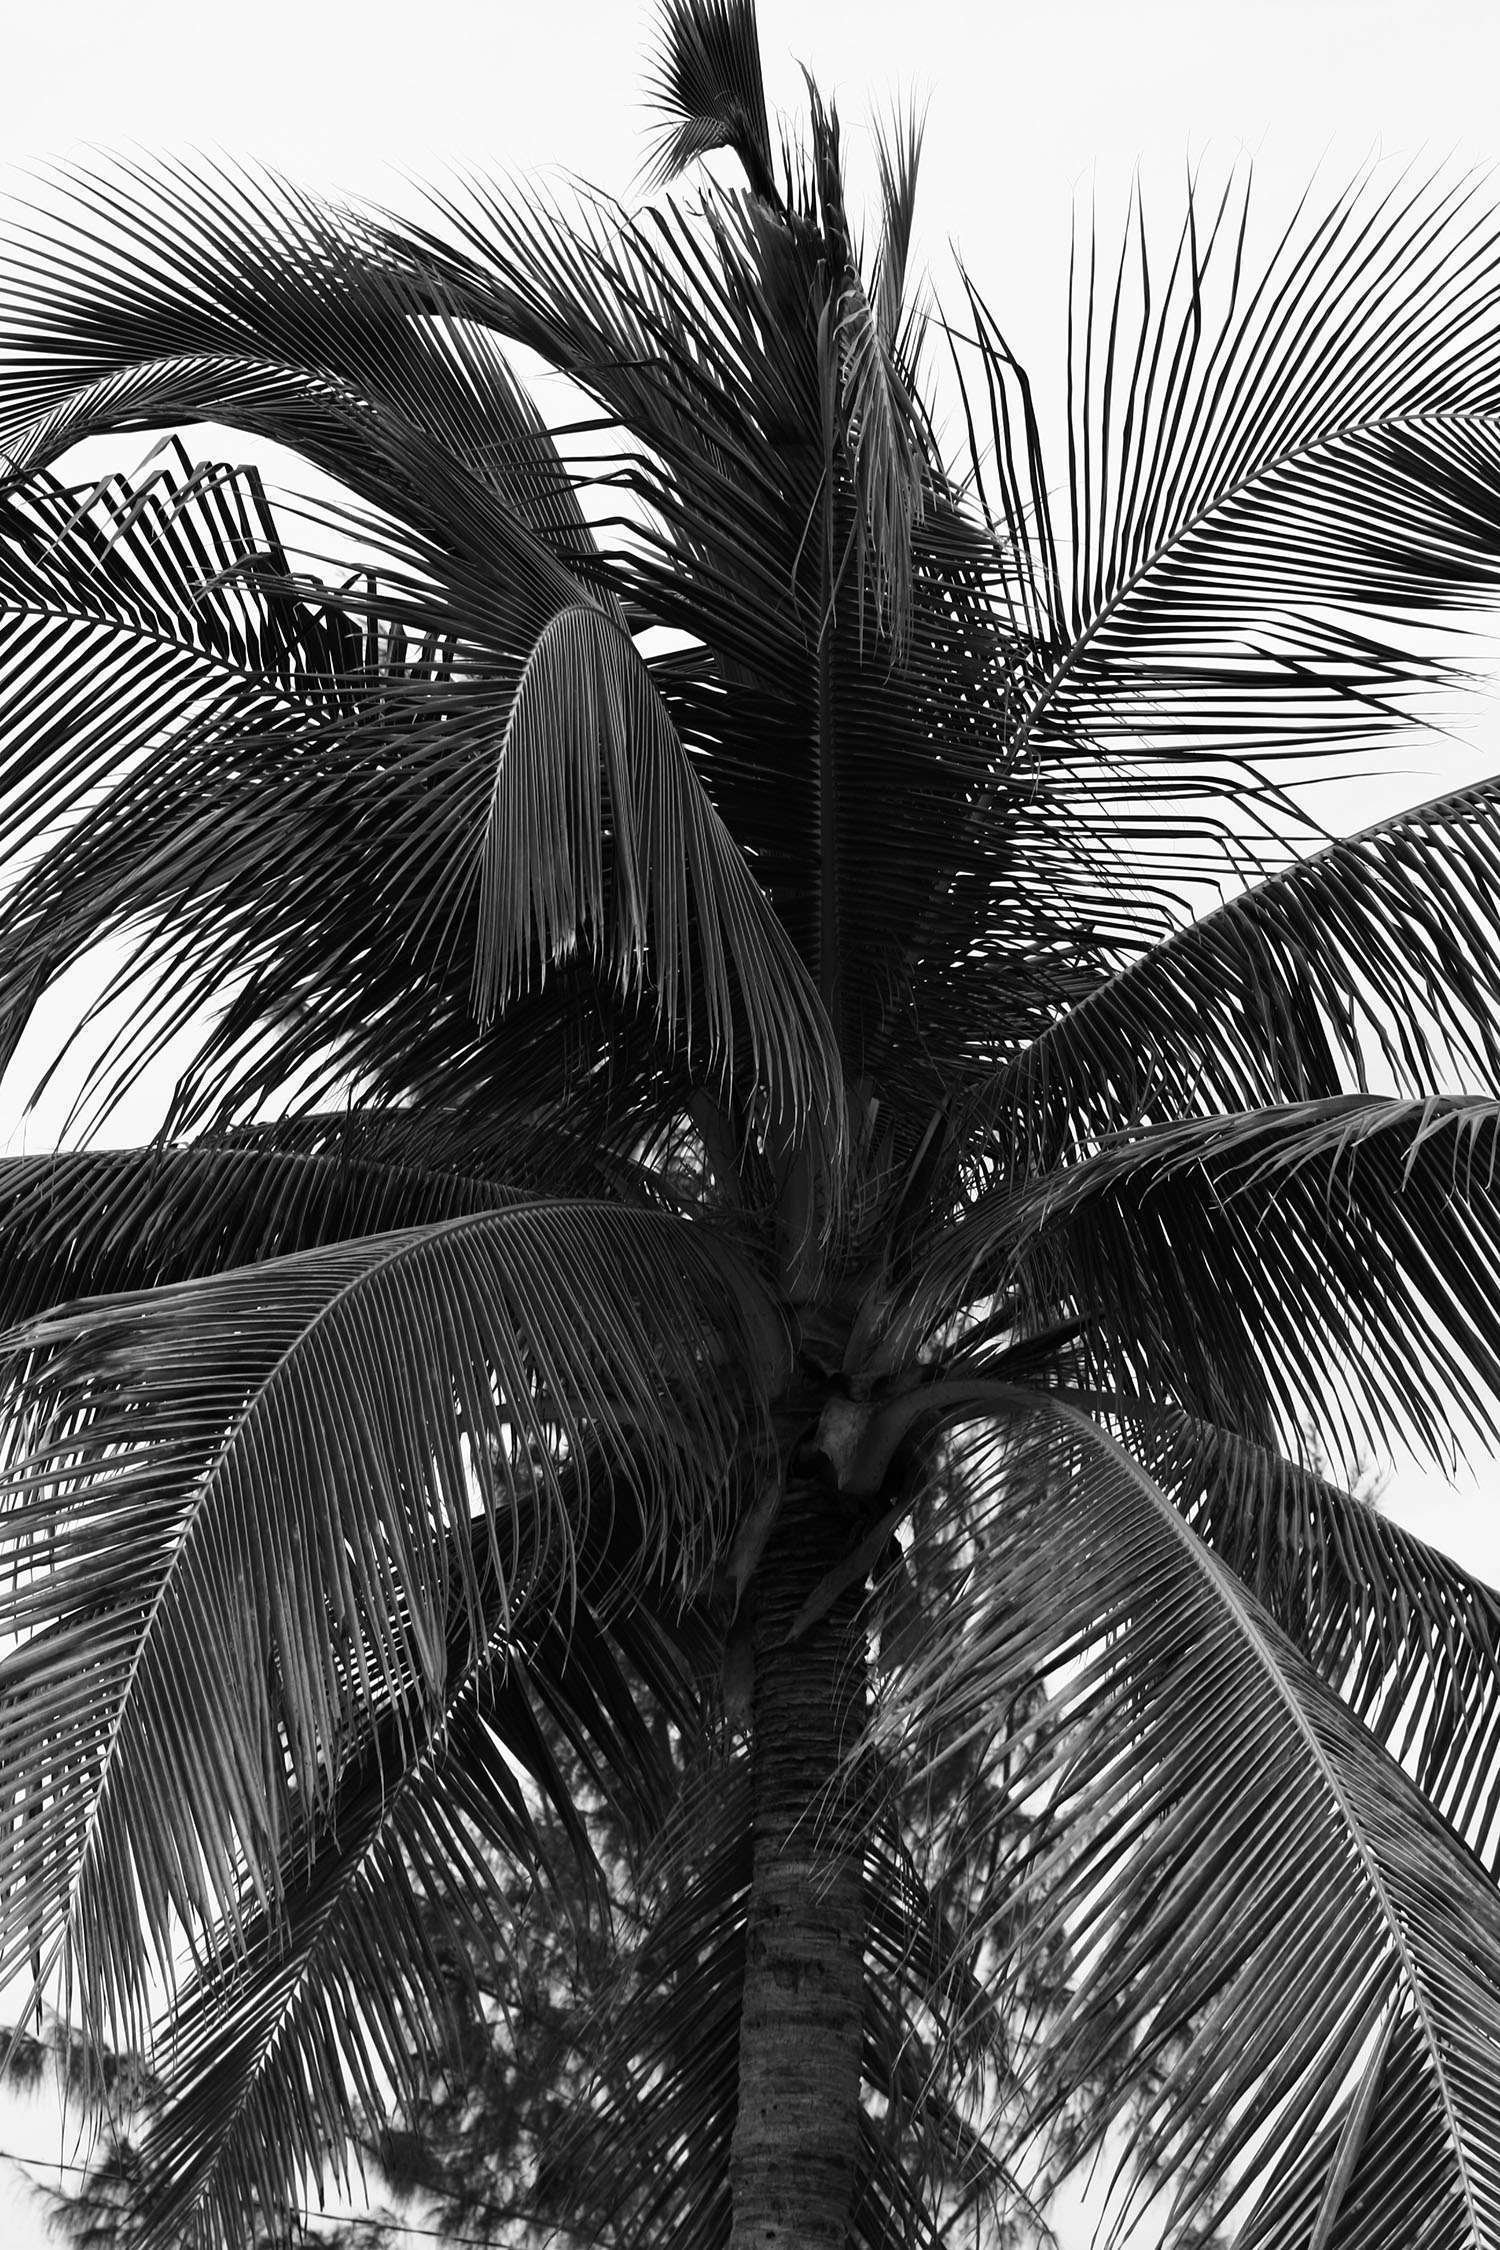 Miroslavo: Palm Tree of Mexico